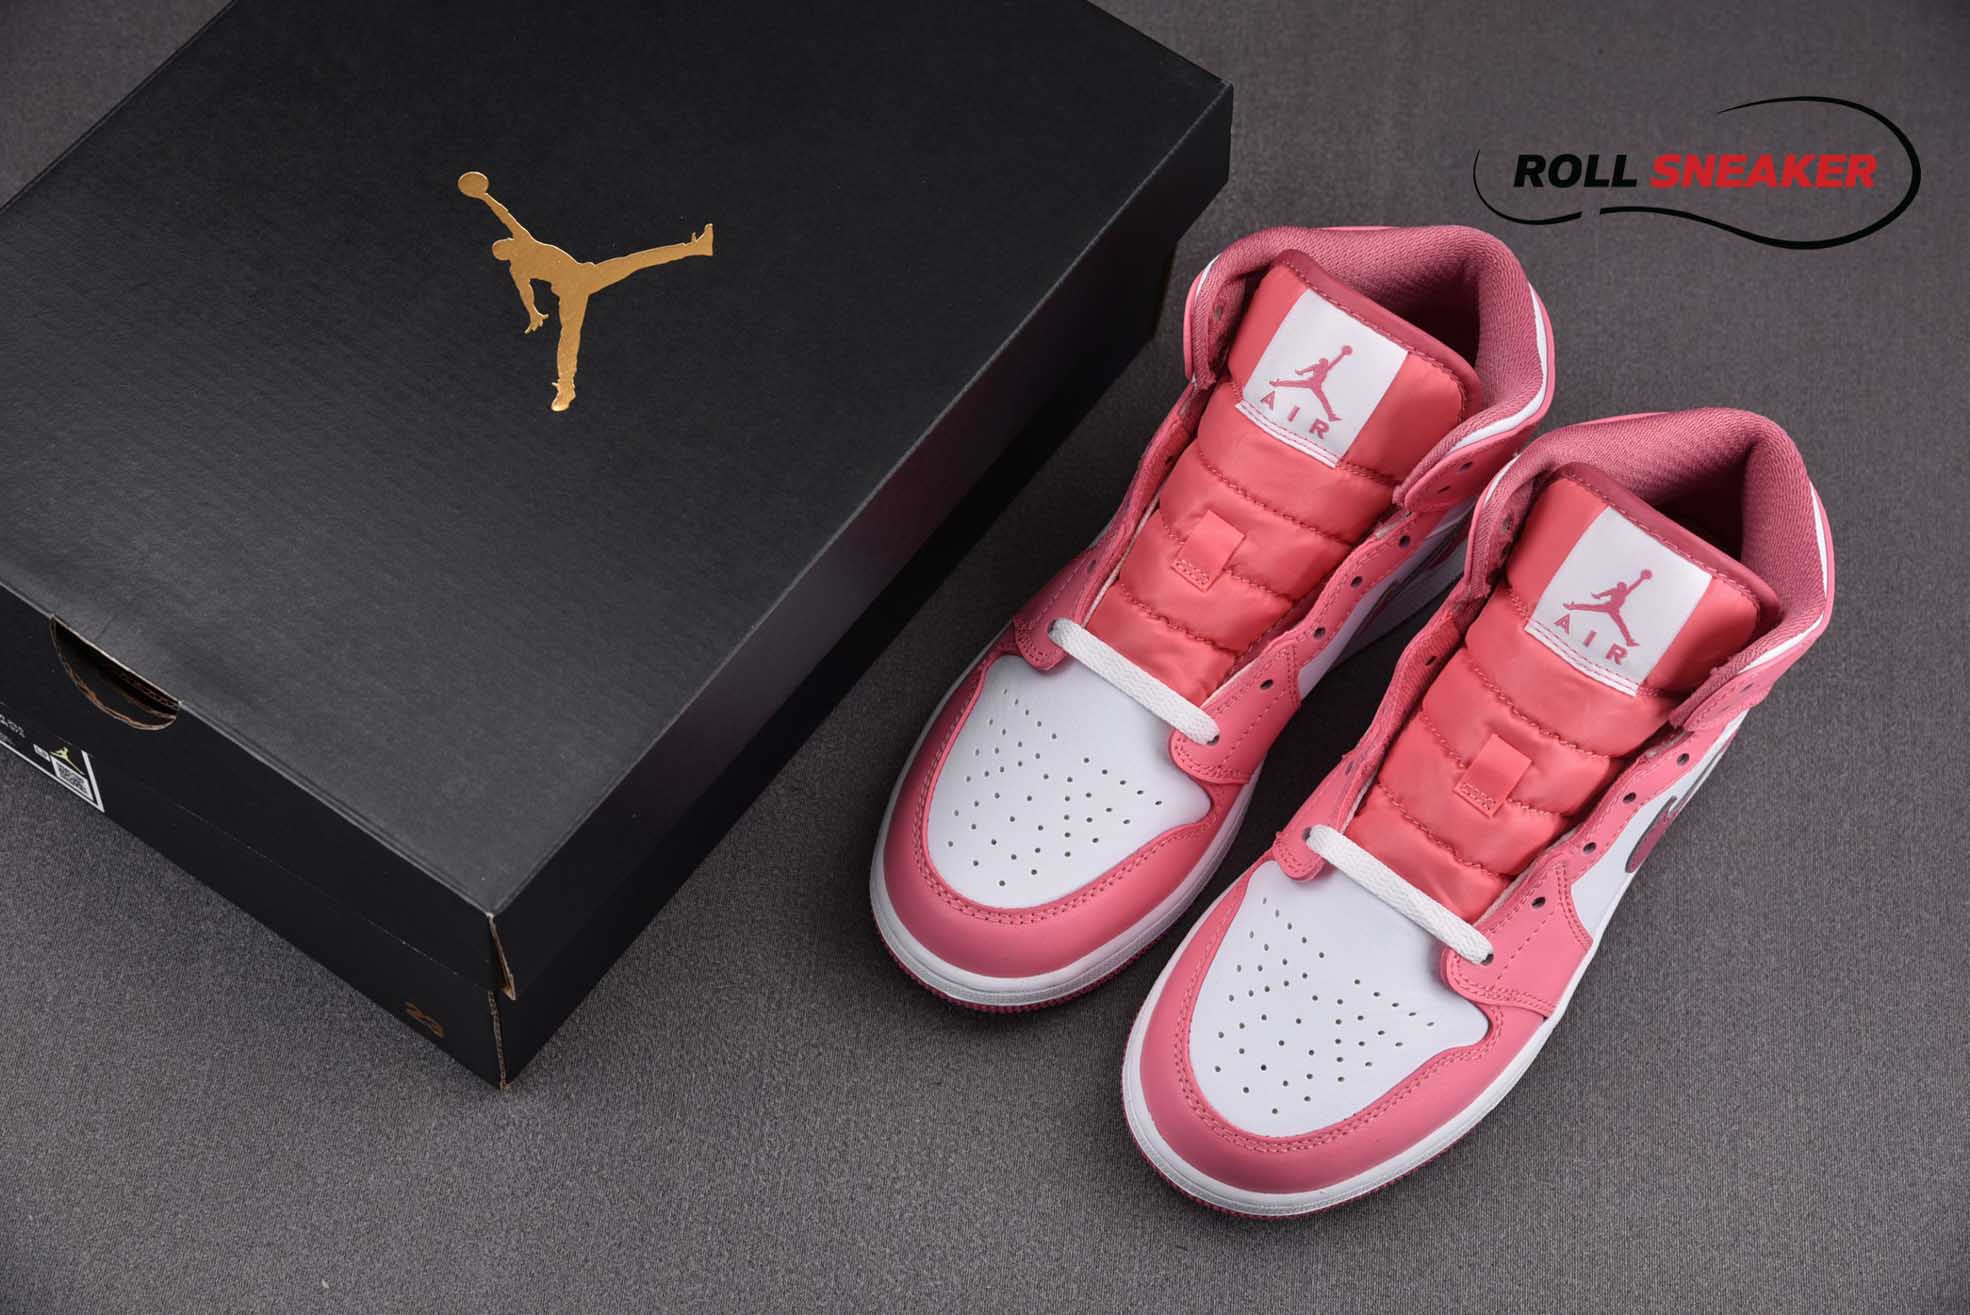 Nike Air Jordan 1 mid GS – Desert Berry Coral Chalk
